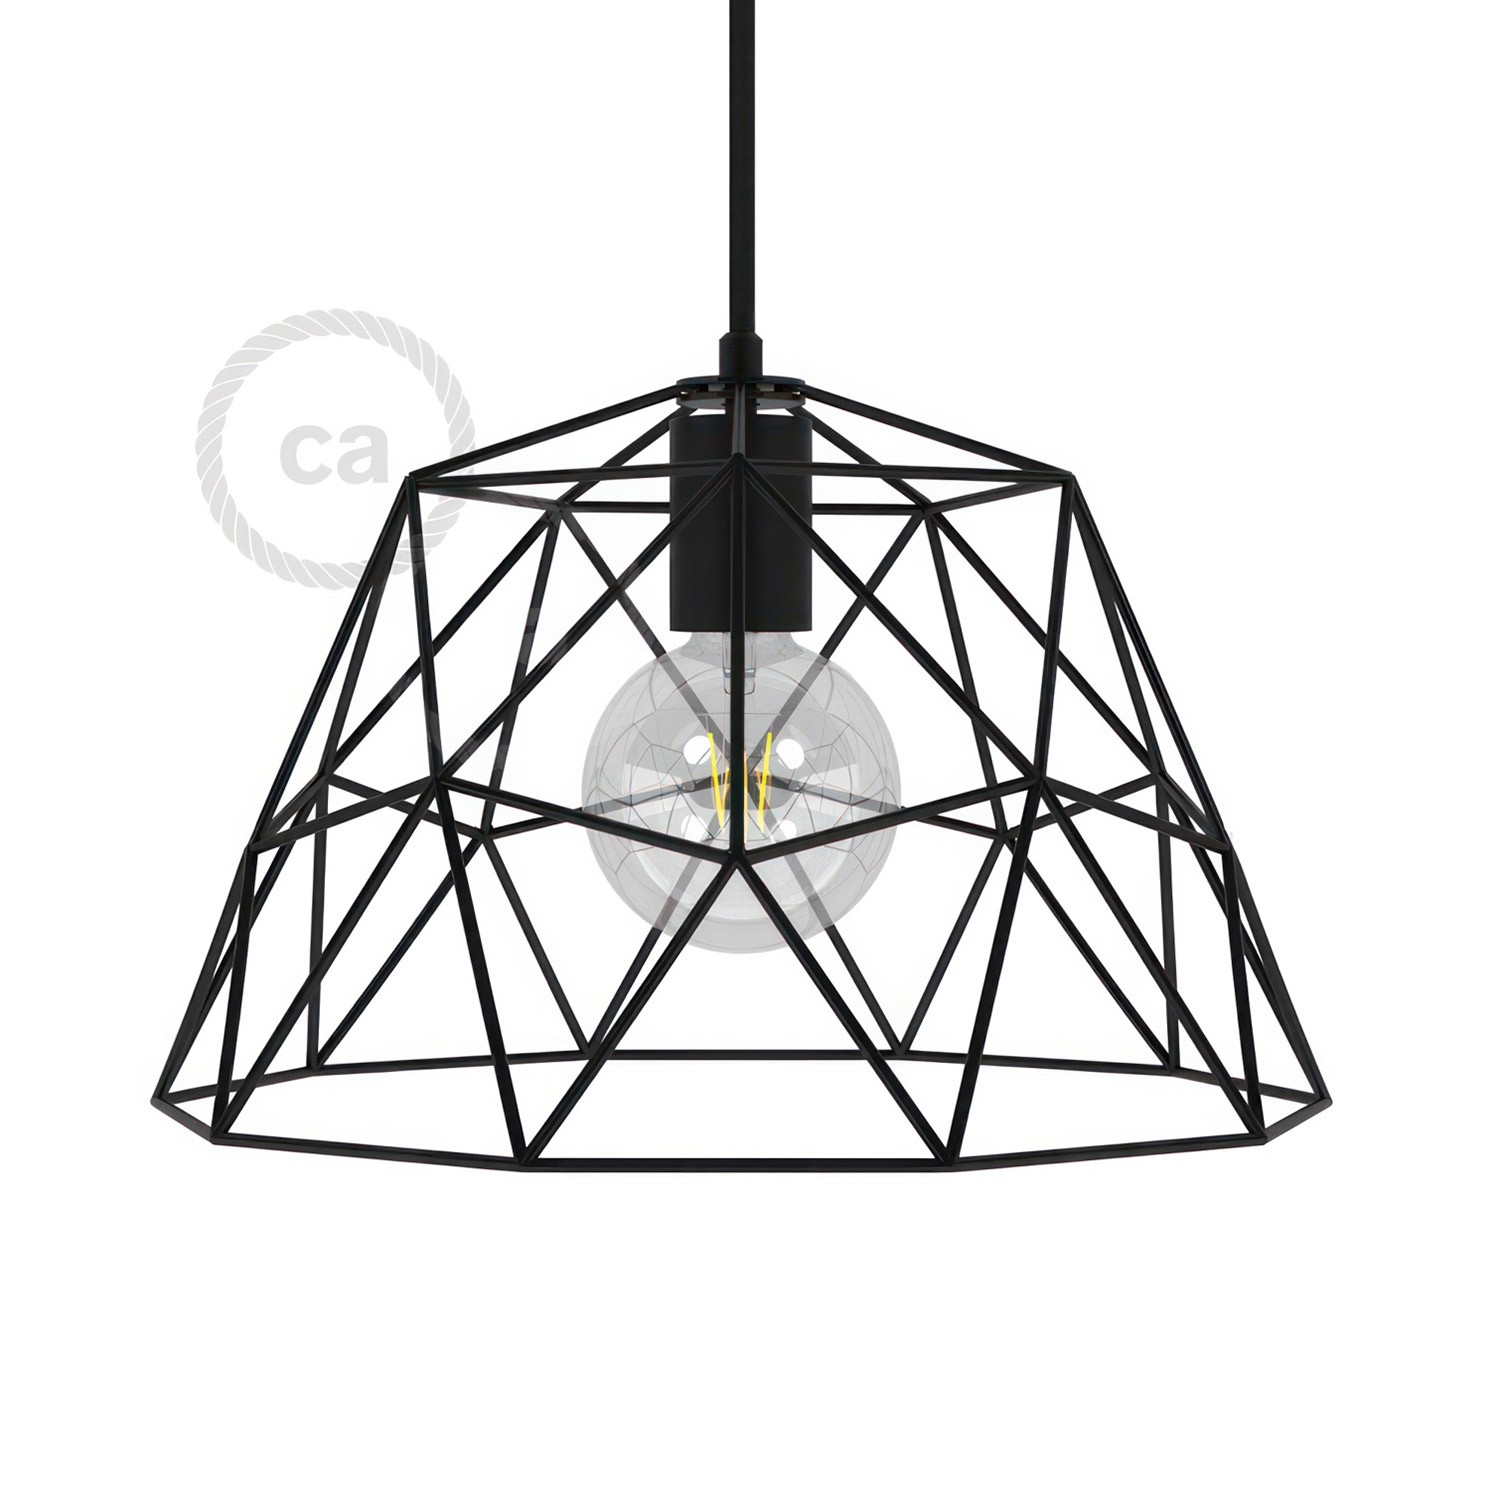 Cage XL Dome metalen lampenkap met E27 fitting